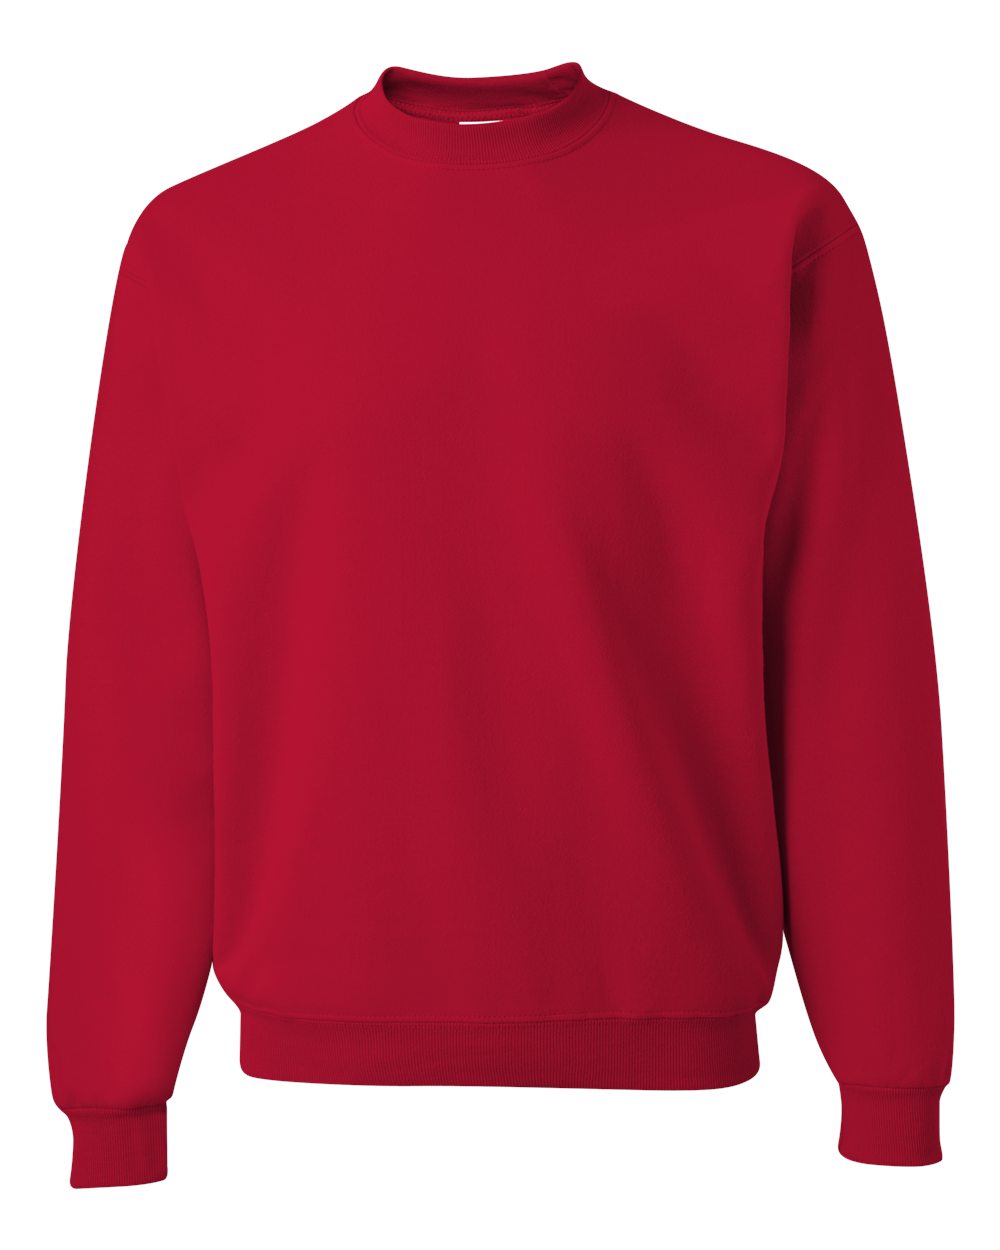 NuBlend Crewneck Sweatshirt - SHIRT PRINTING 4U